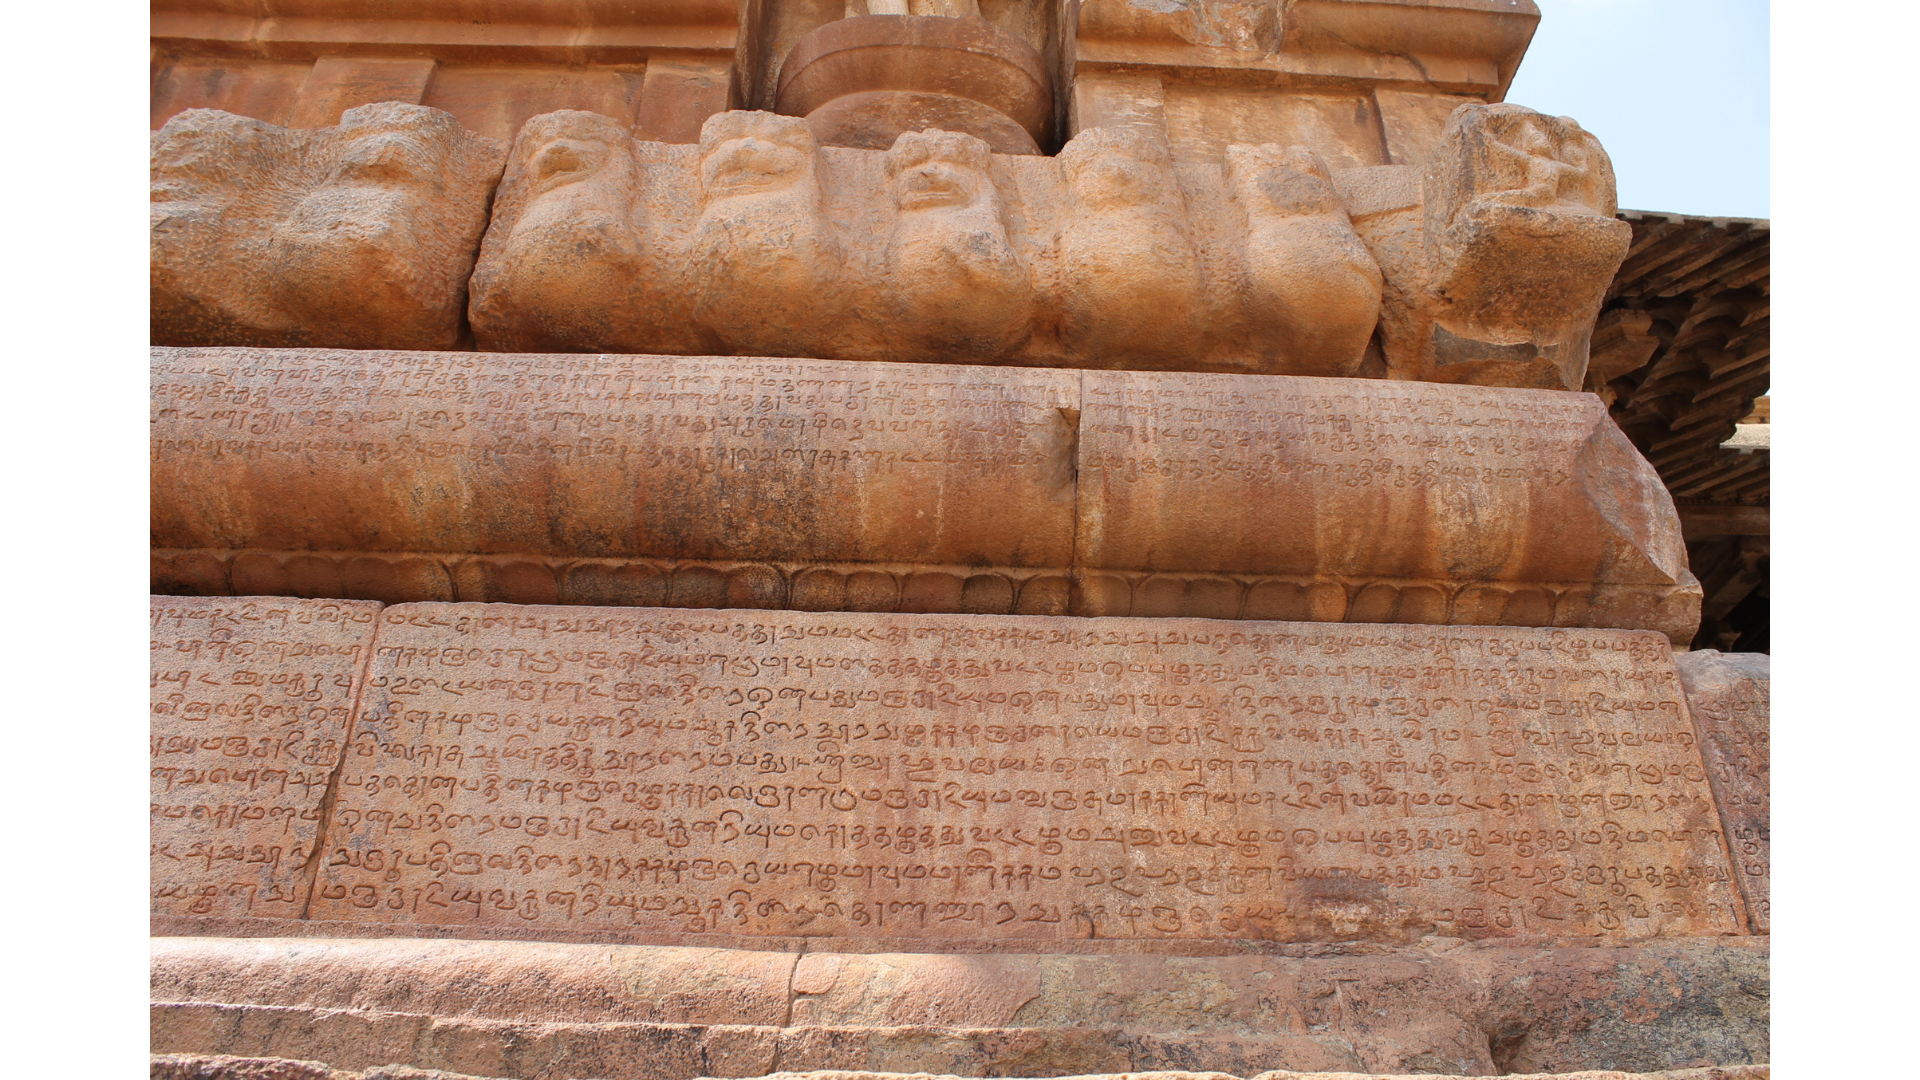 Tamil Inscriptions at Brihadisvara temple, Thanjavur